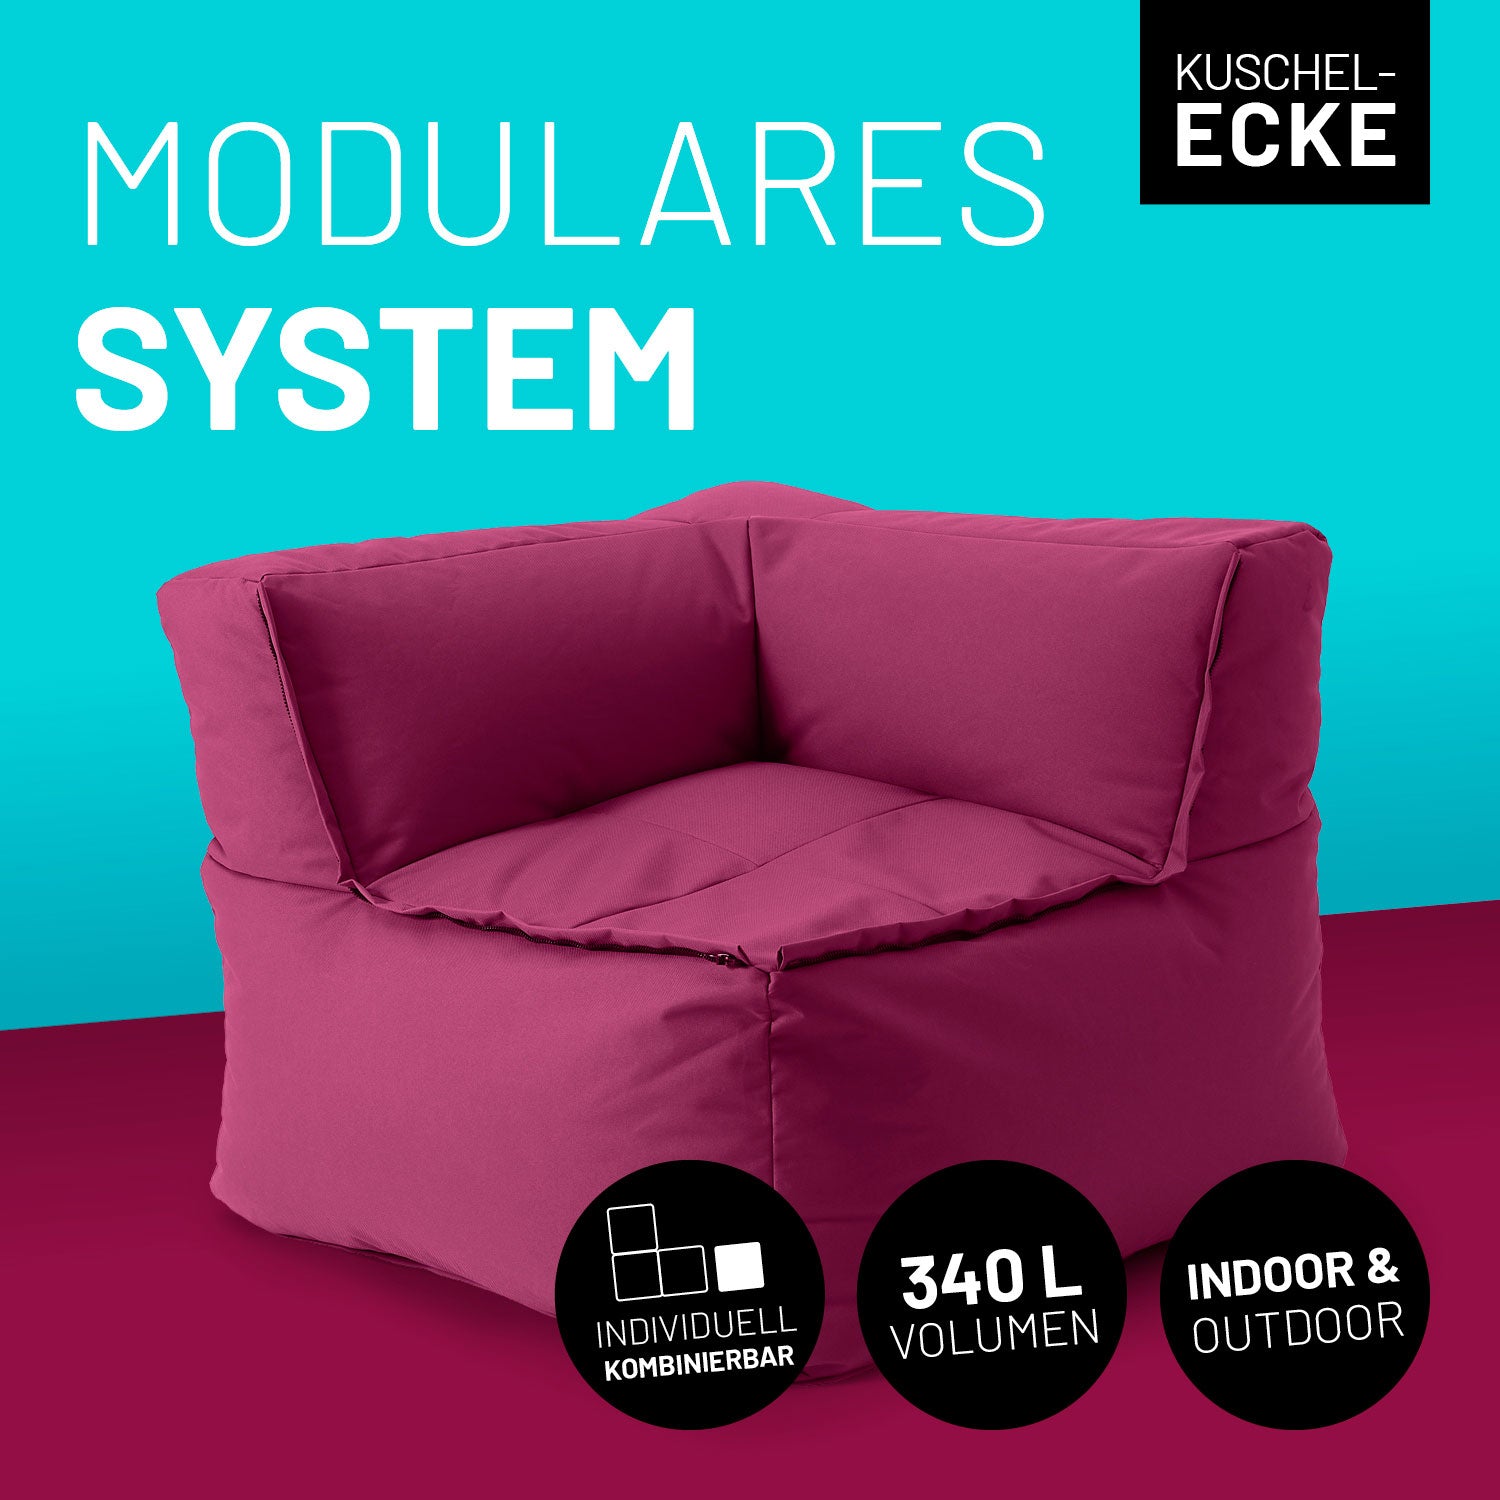 Sitzsack-Sofa Ecke (340 L) - Modulares System - indoor & outdoor - Rotwein